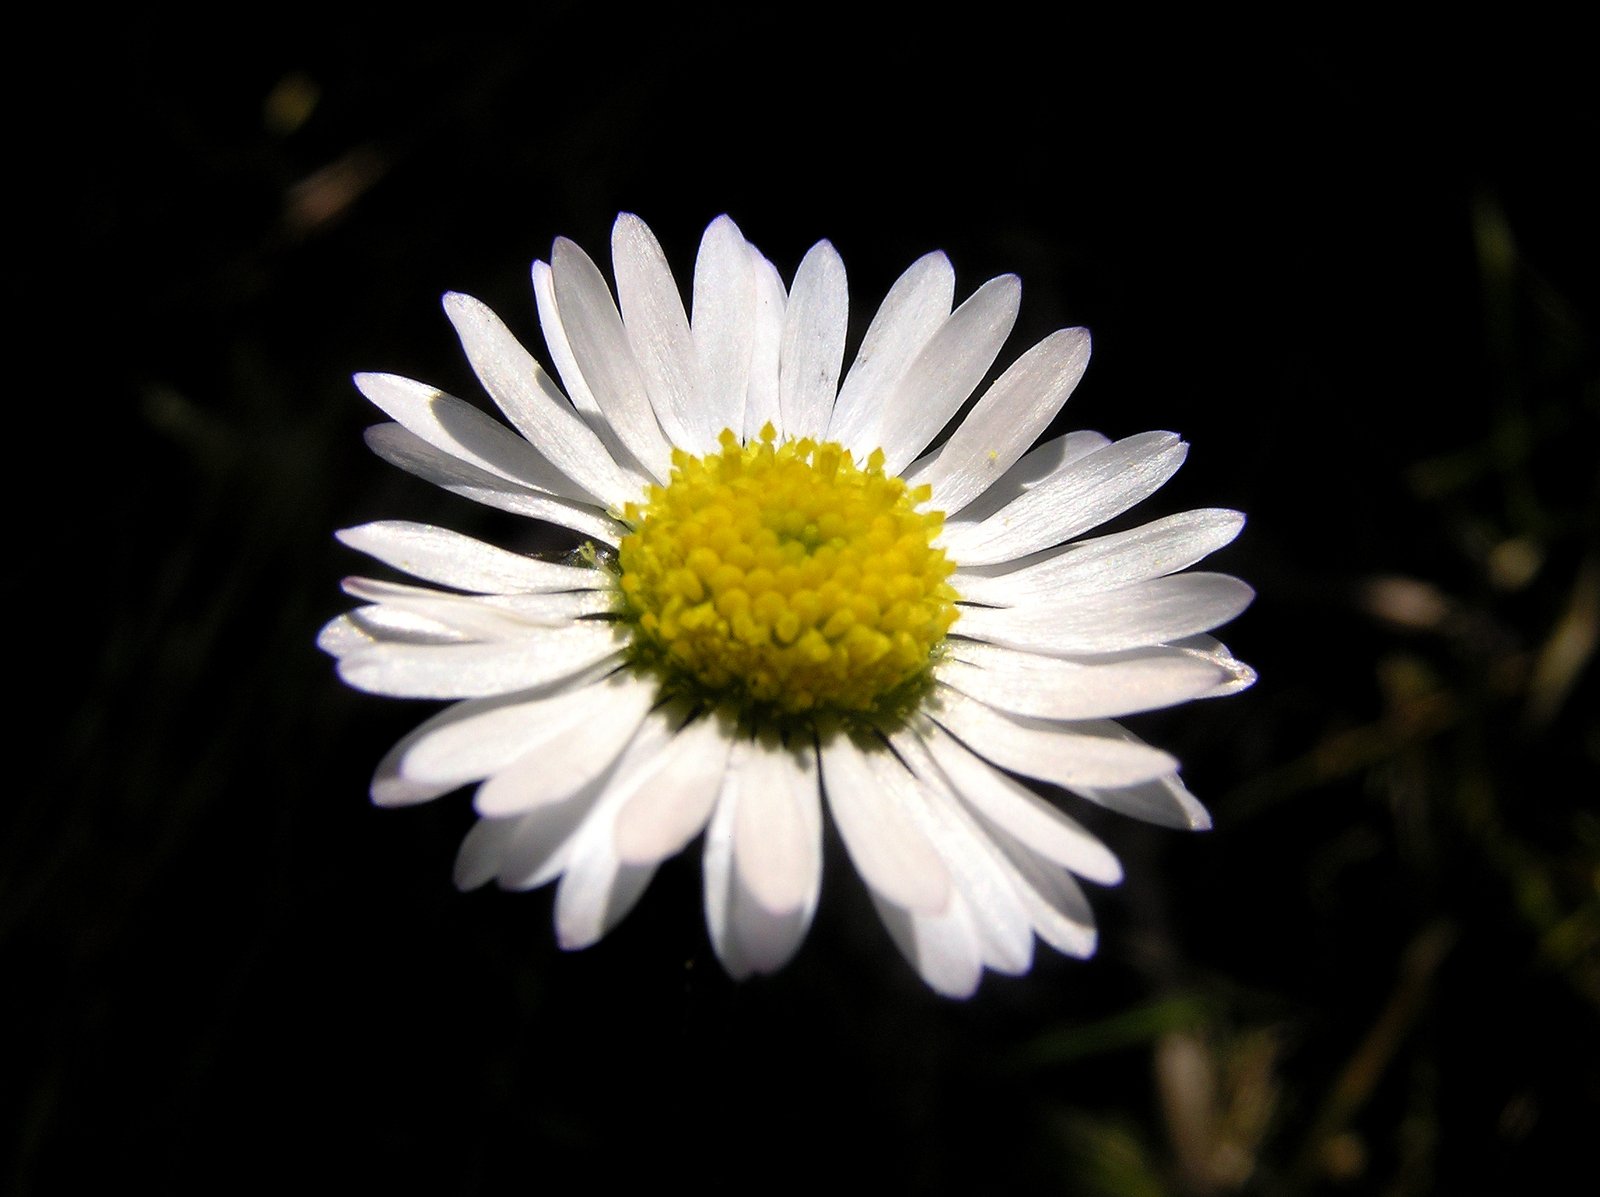 a white daisy flower with green center on dark background